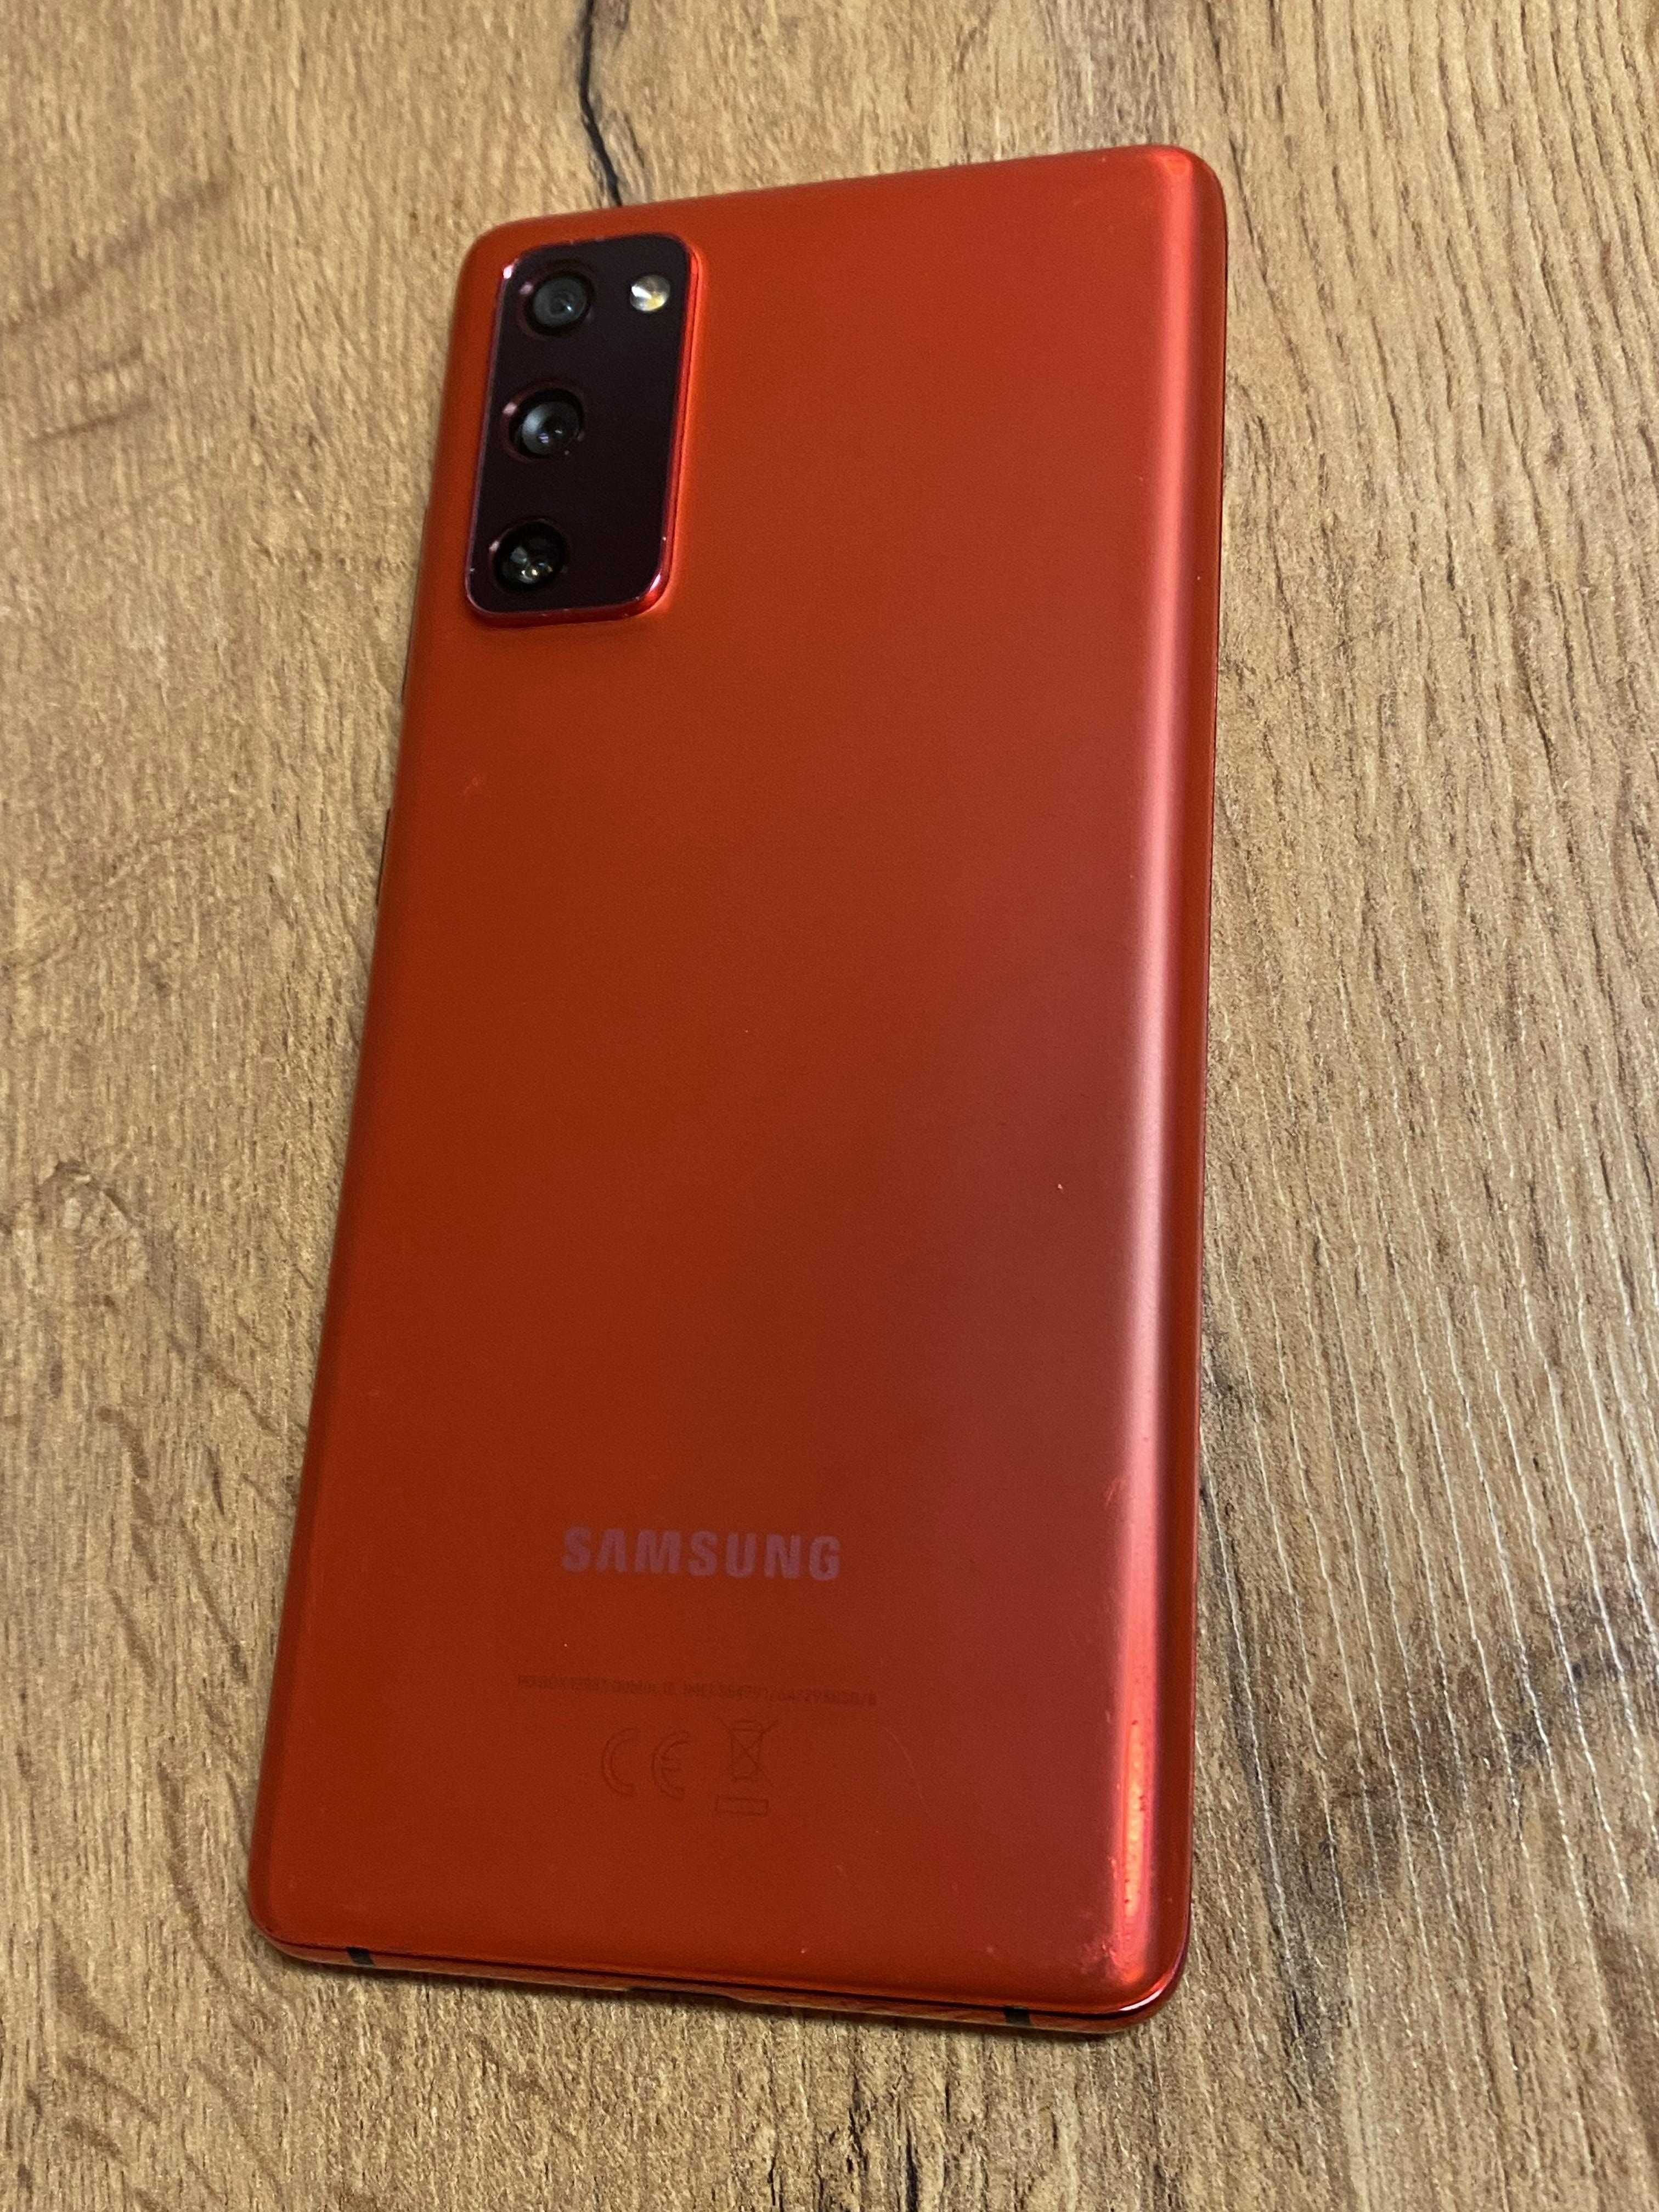 Samsung s20 Gray 128GB 8GB Rami - S20 Fan Edition 128GB Red + Husa